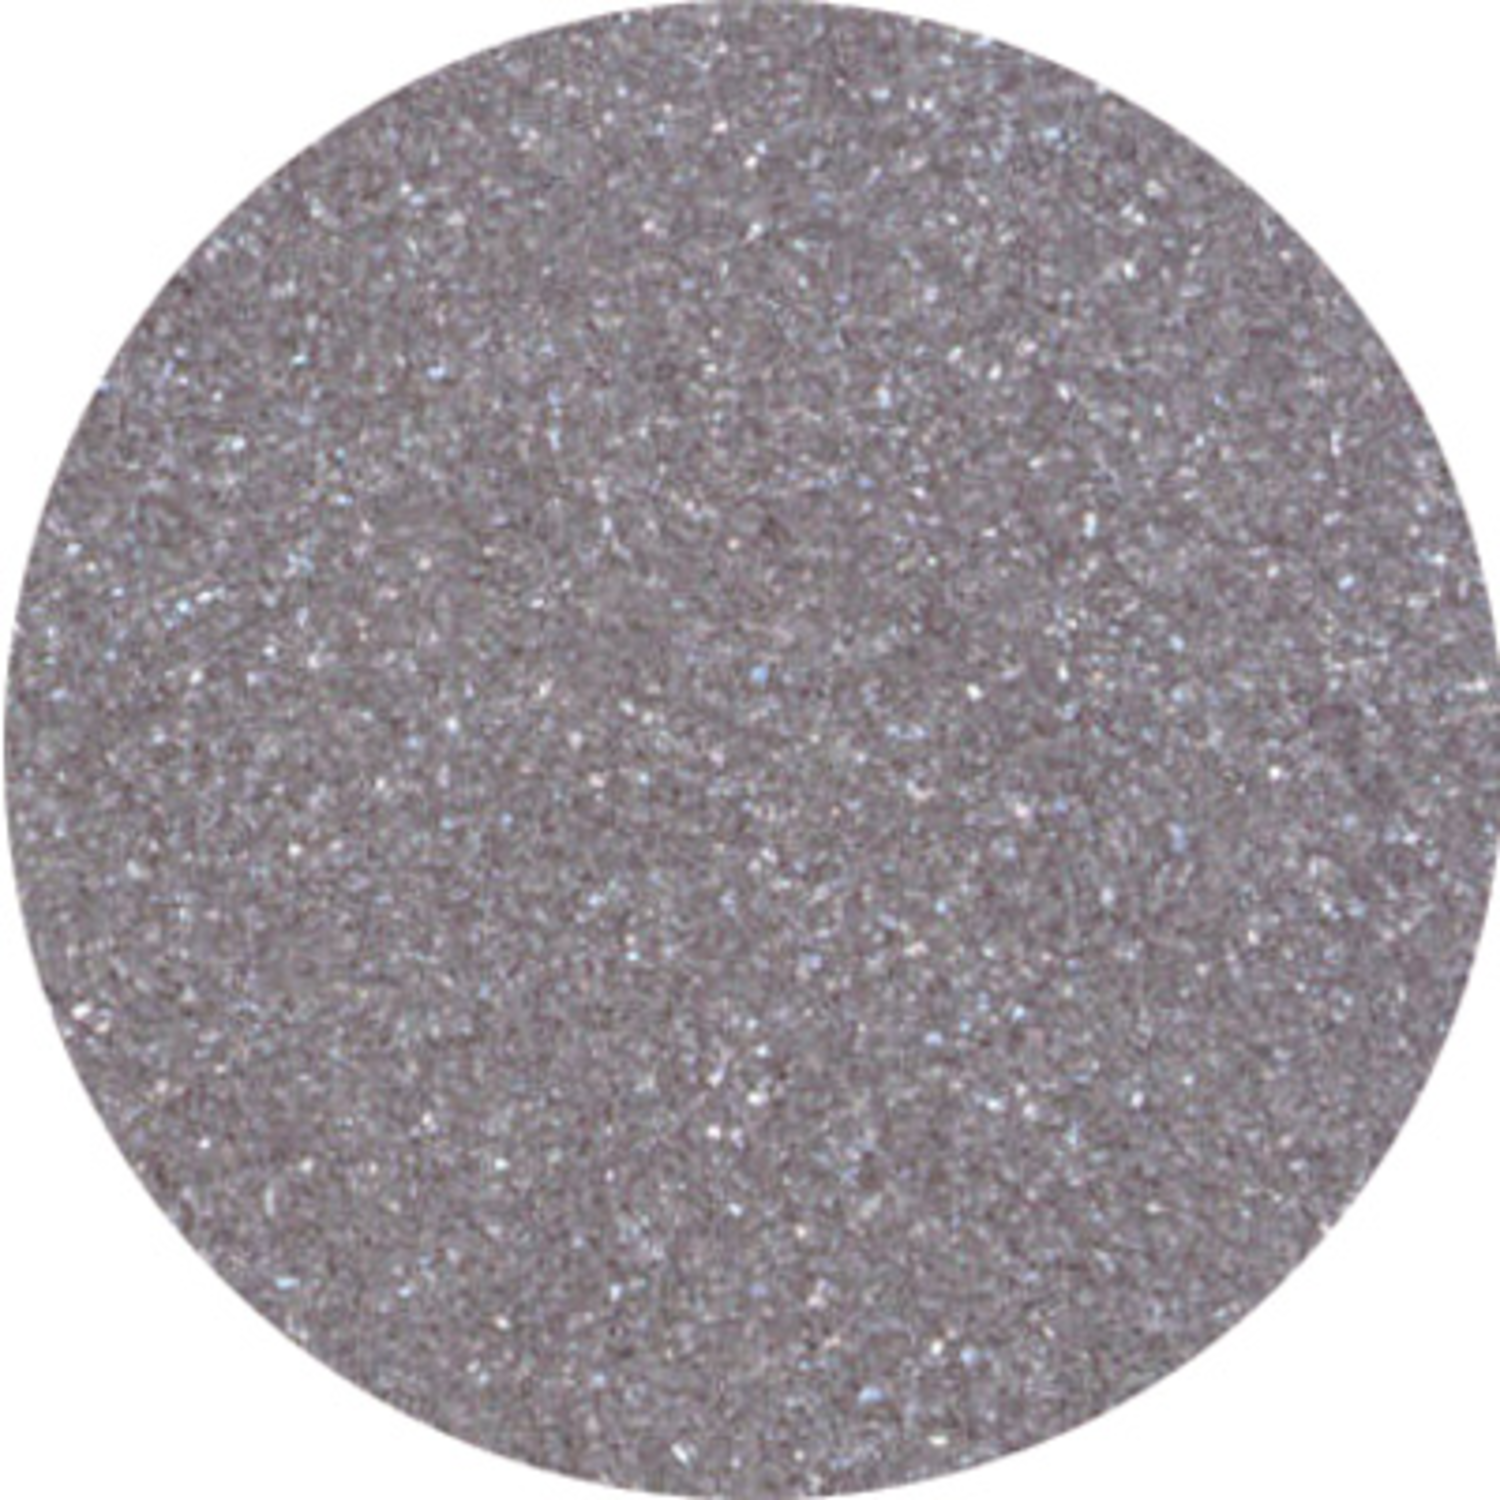 Metallic Silver Fine Glitter Dust - Whisk